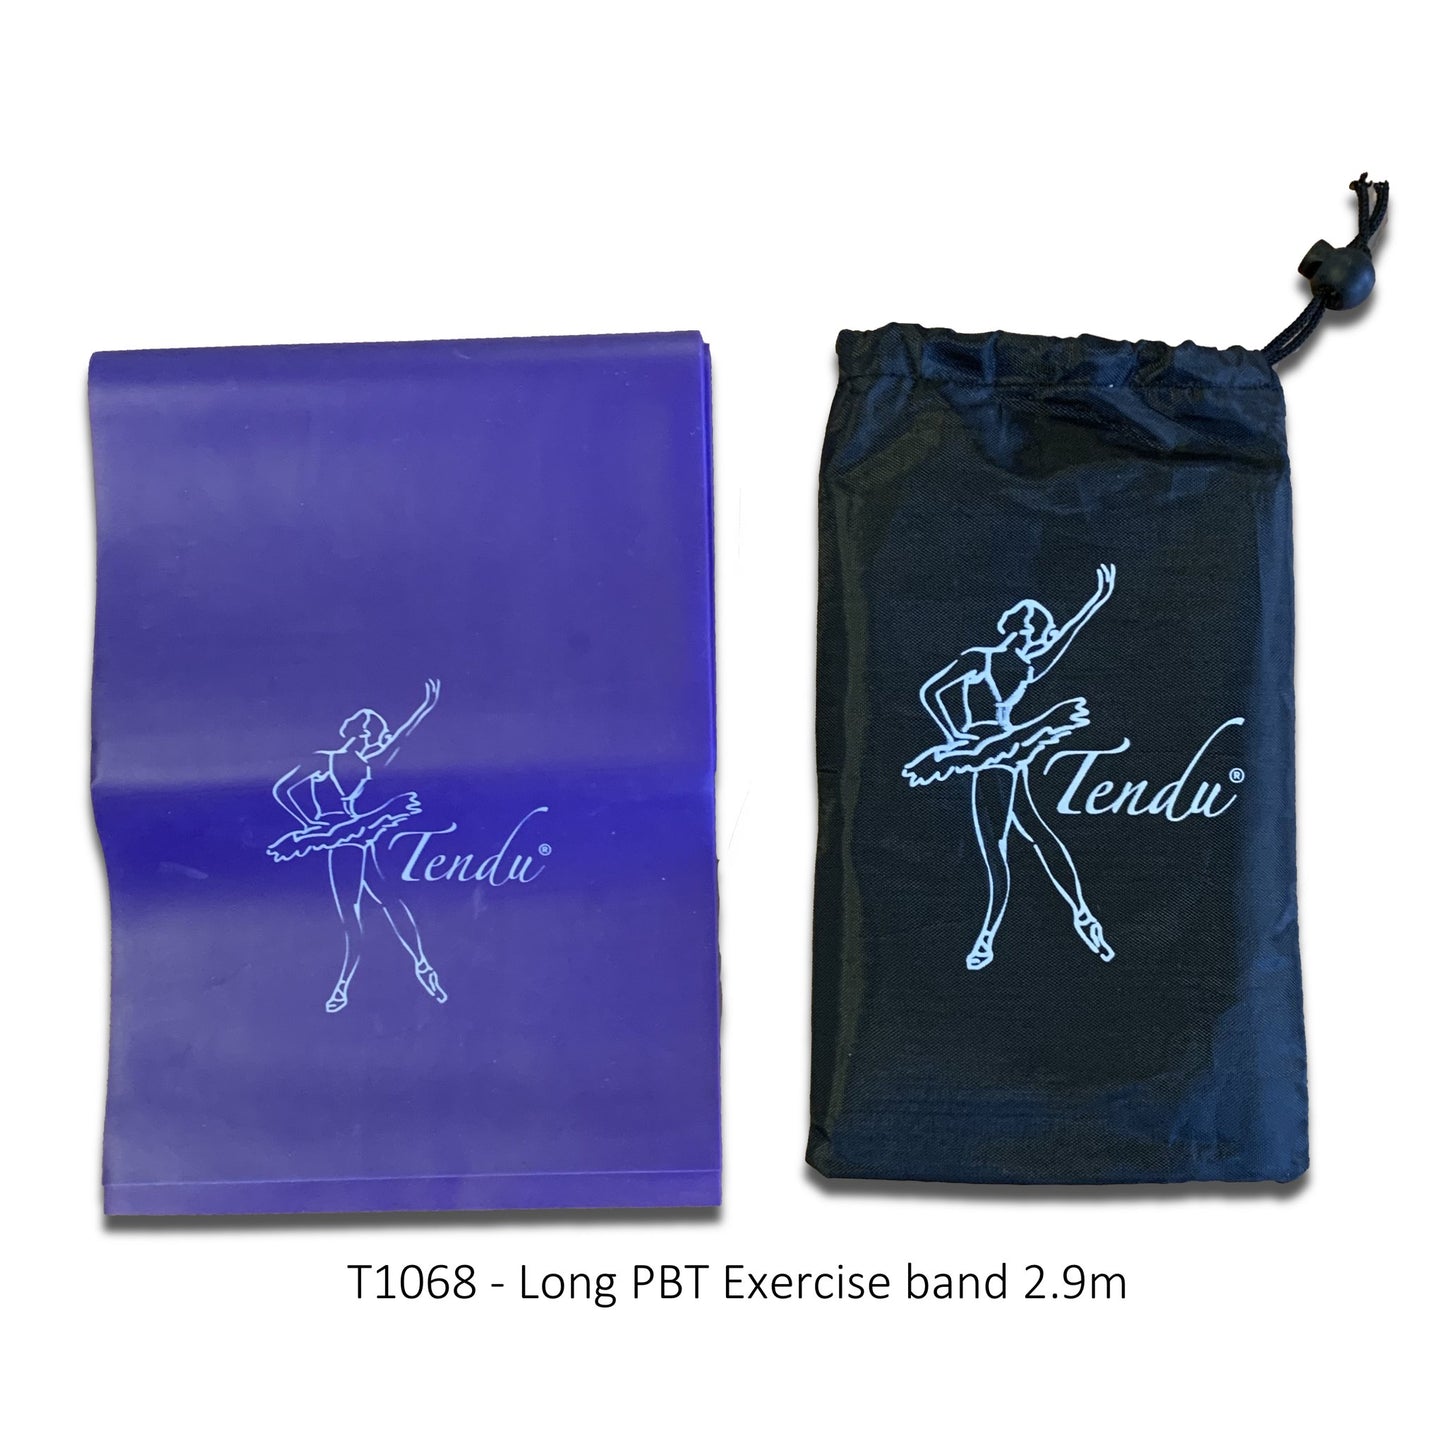 Tendu Long PBT Exercise Band (2.9m)